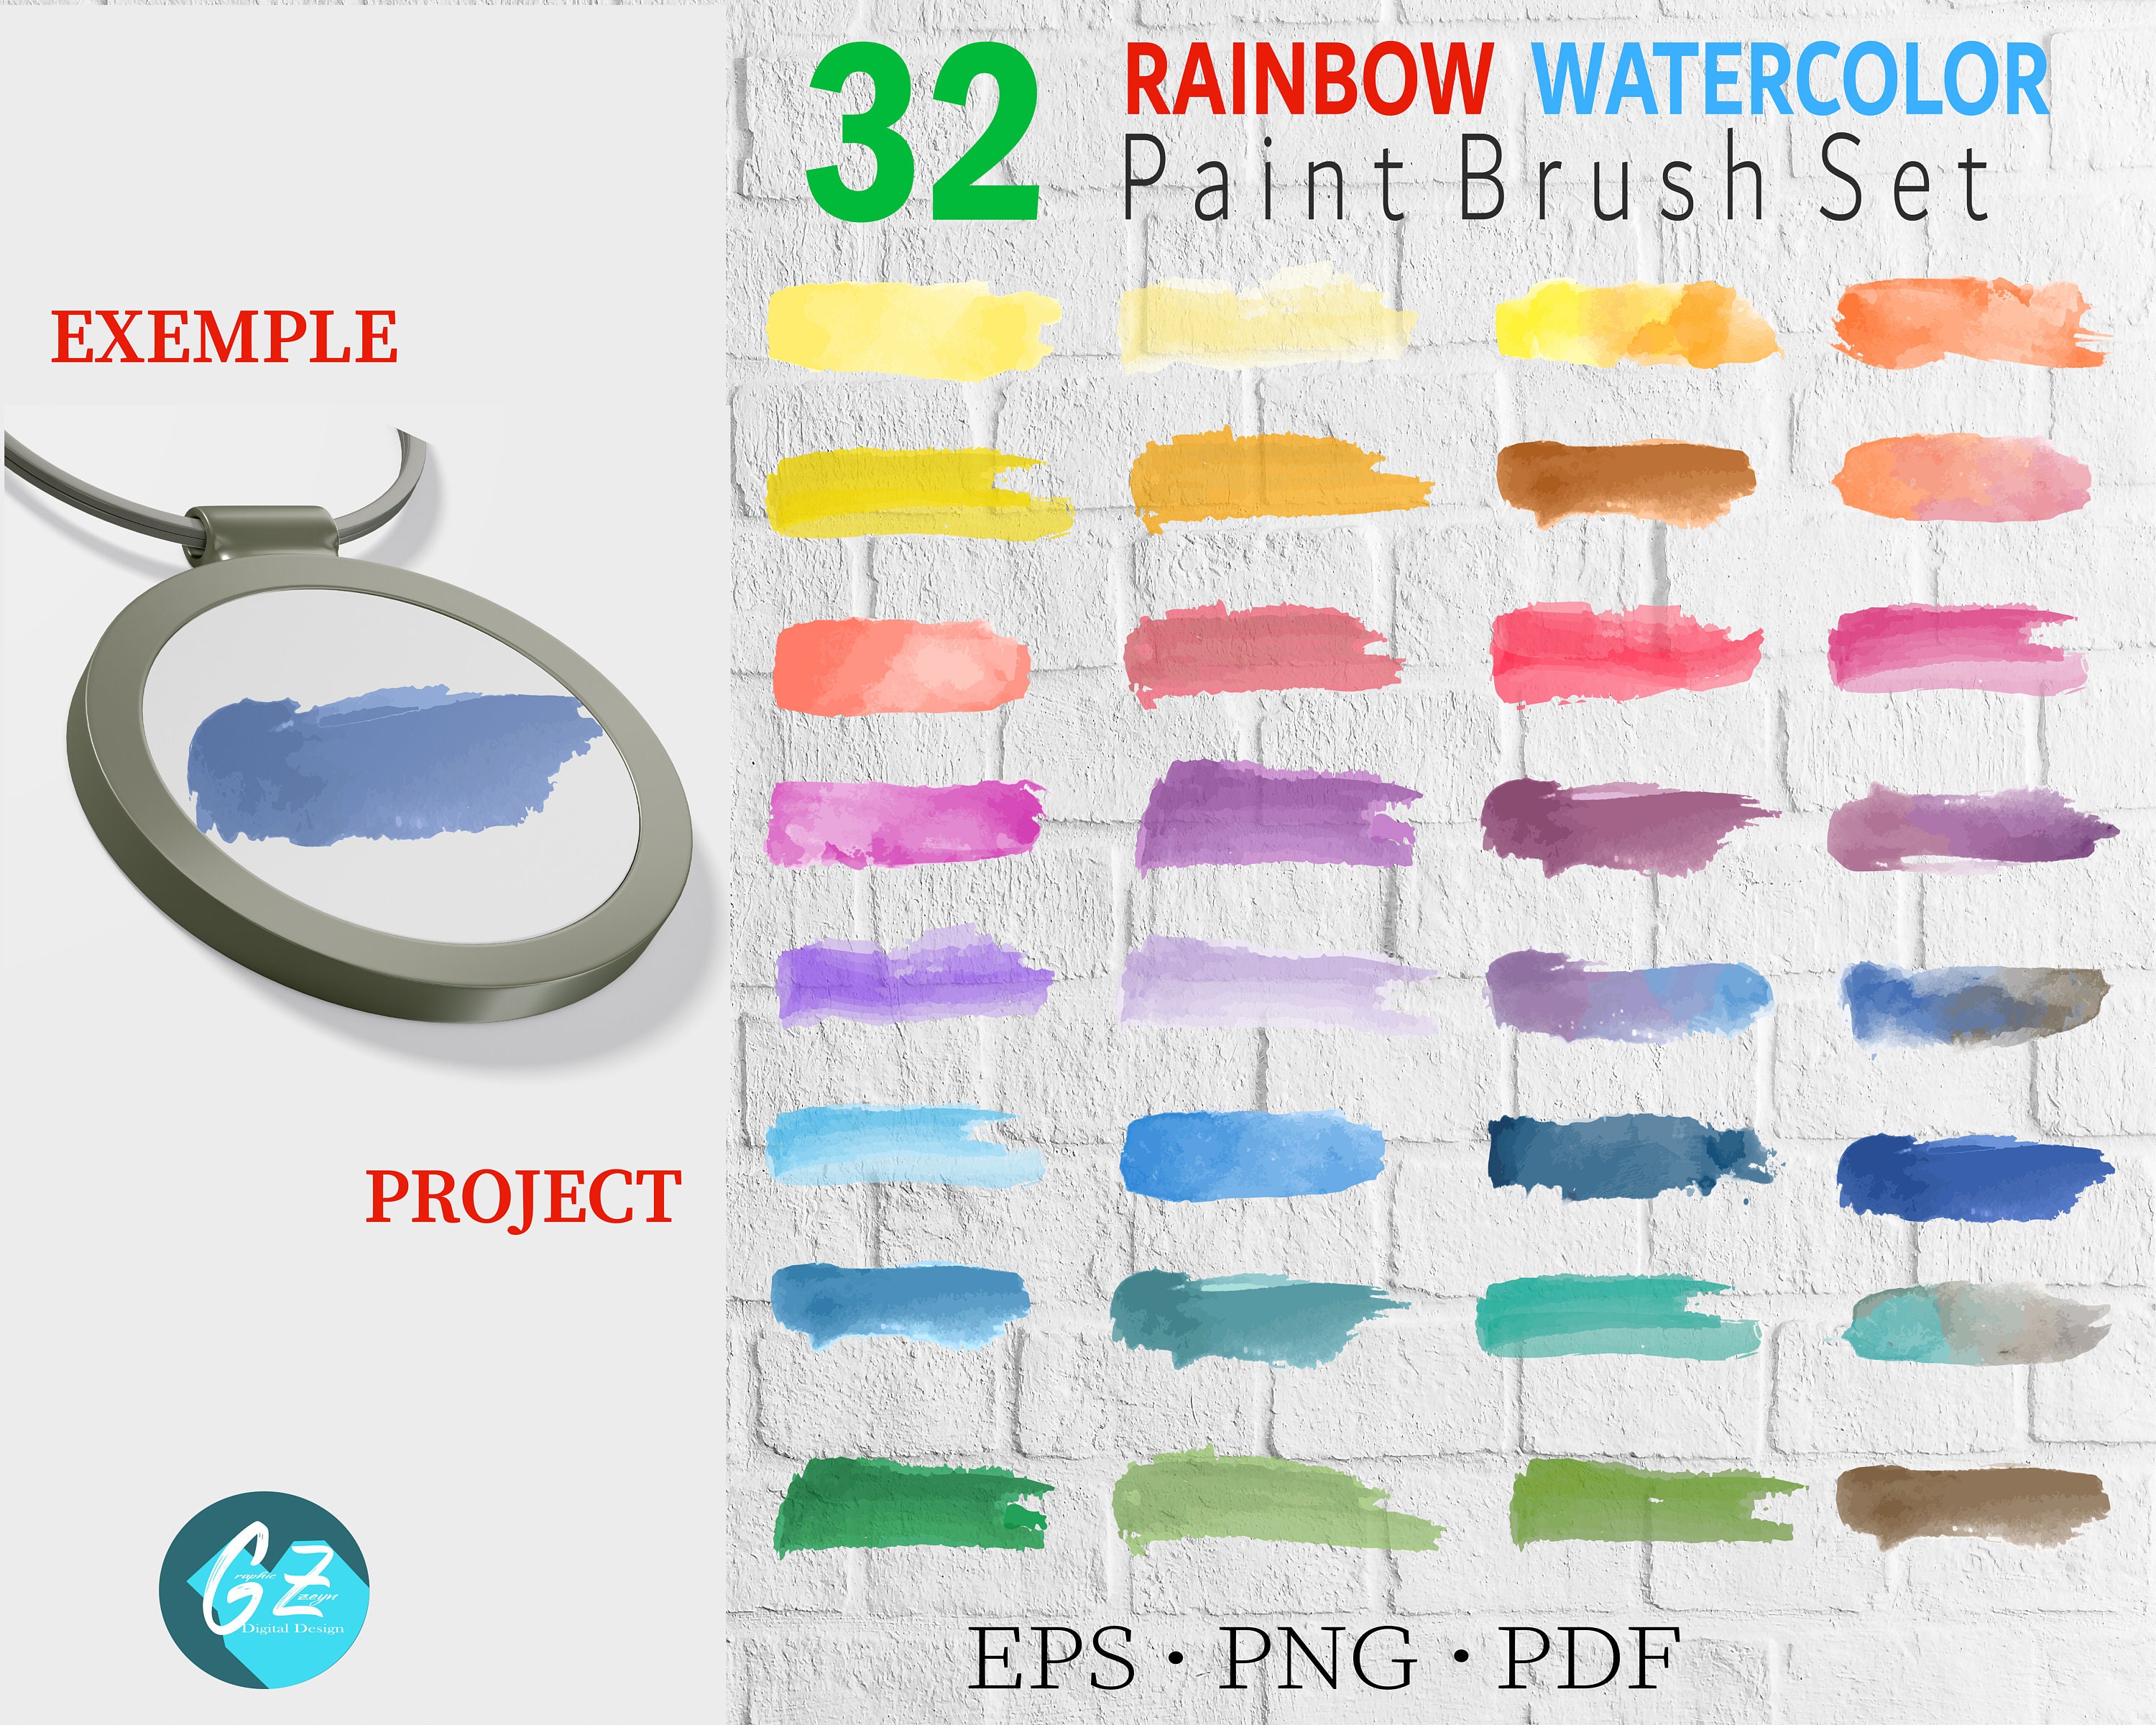 Watercolor Gradients 2 Digital Paper, Rainbow Water Color Paint